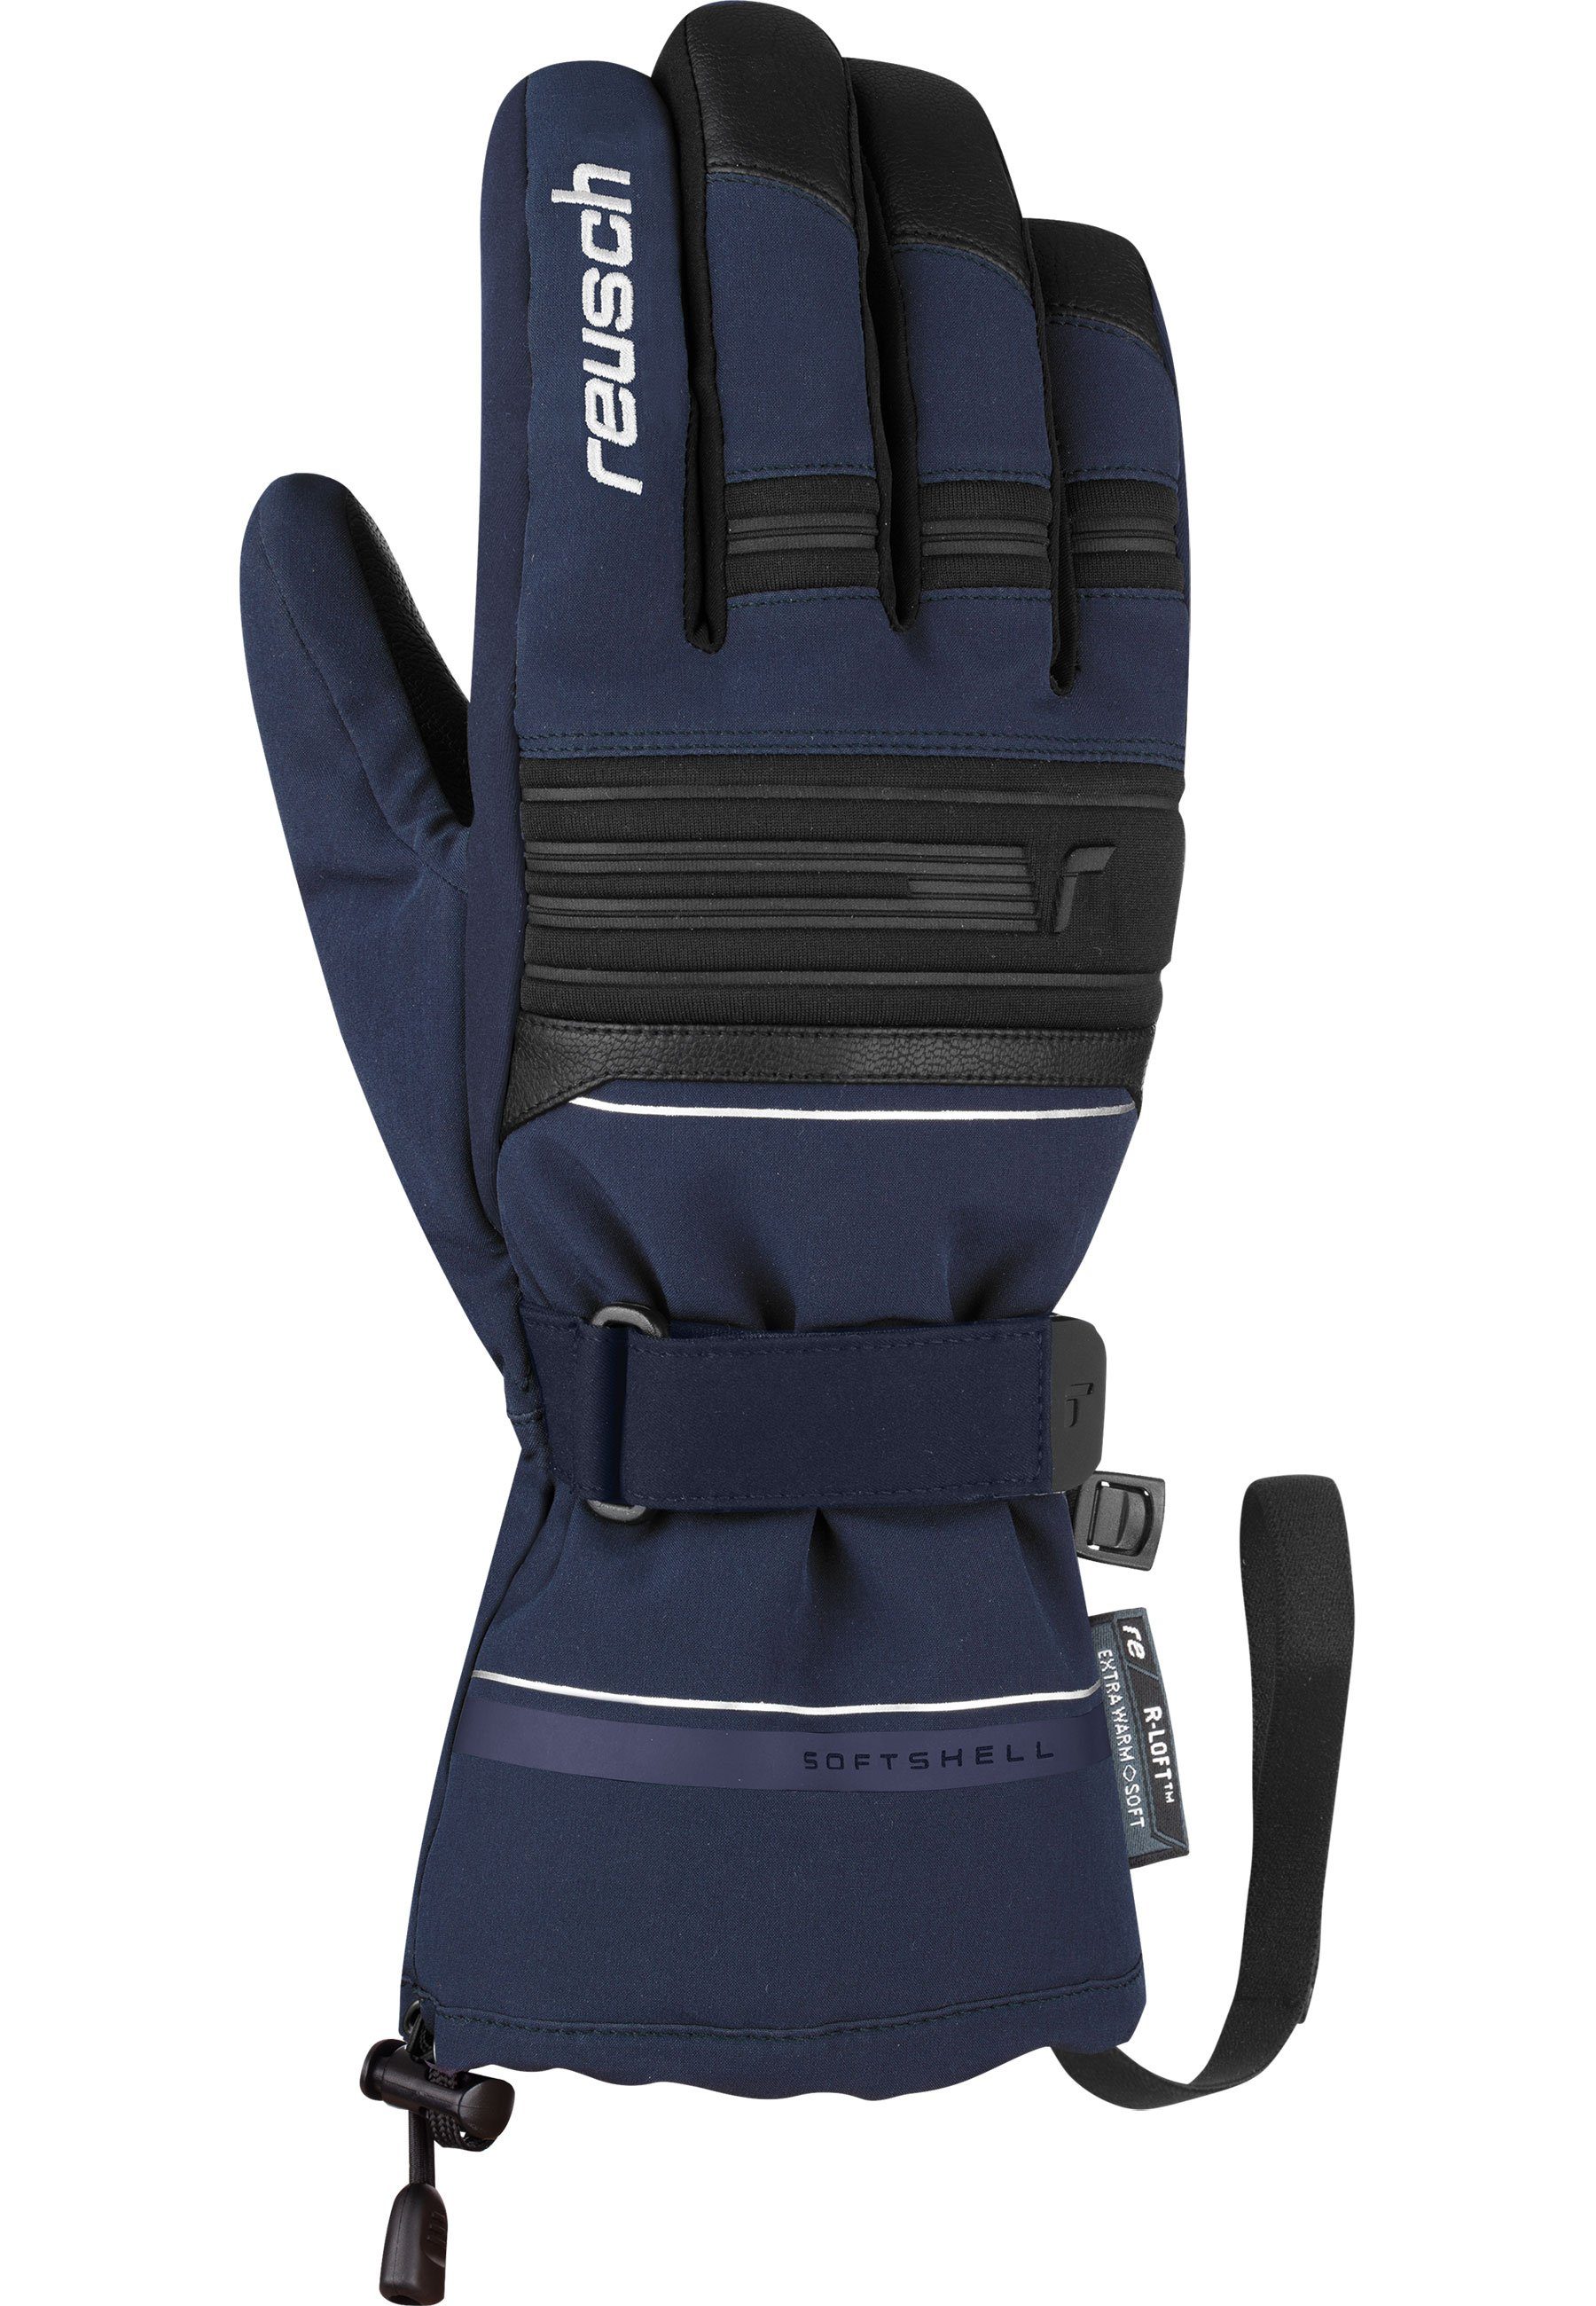 und blau-schwarz Kondor Reusch XT R-TEX® in Design wasserdichtem atmungsaktivem Skihandschuhe